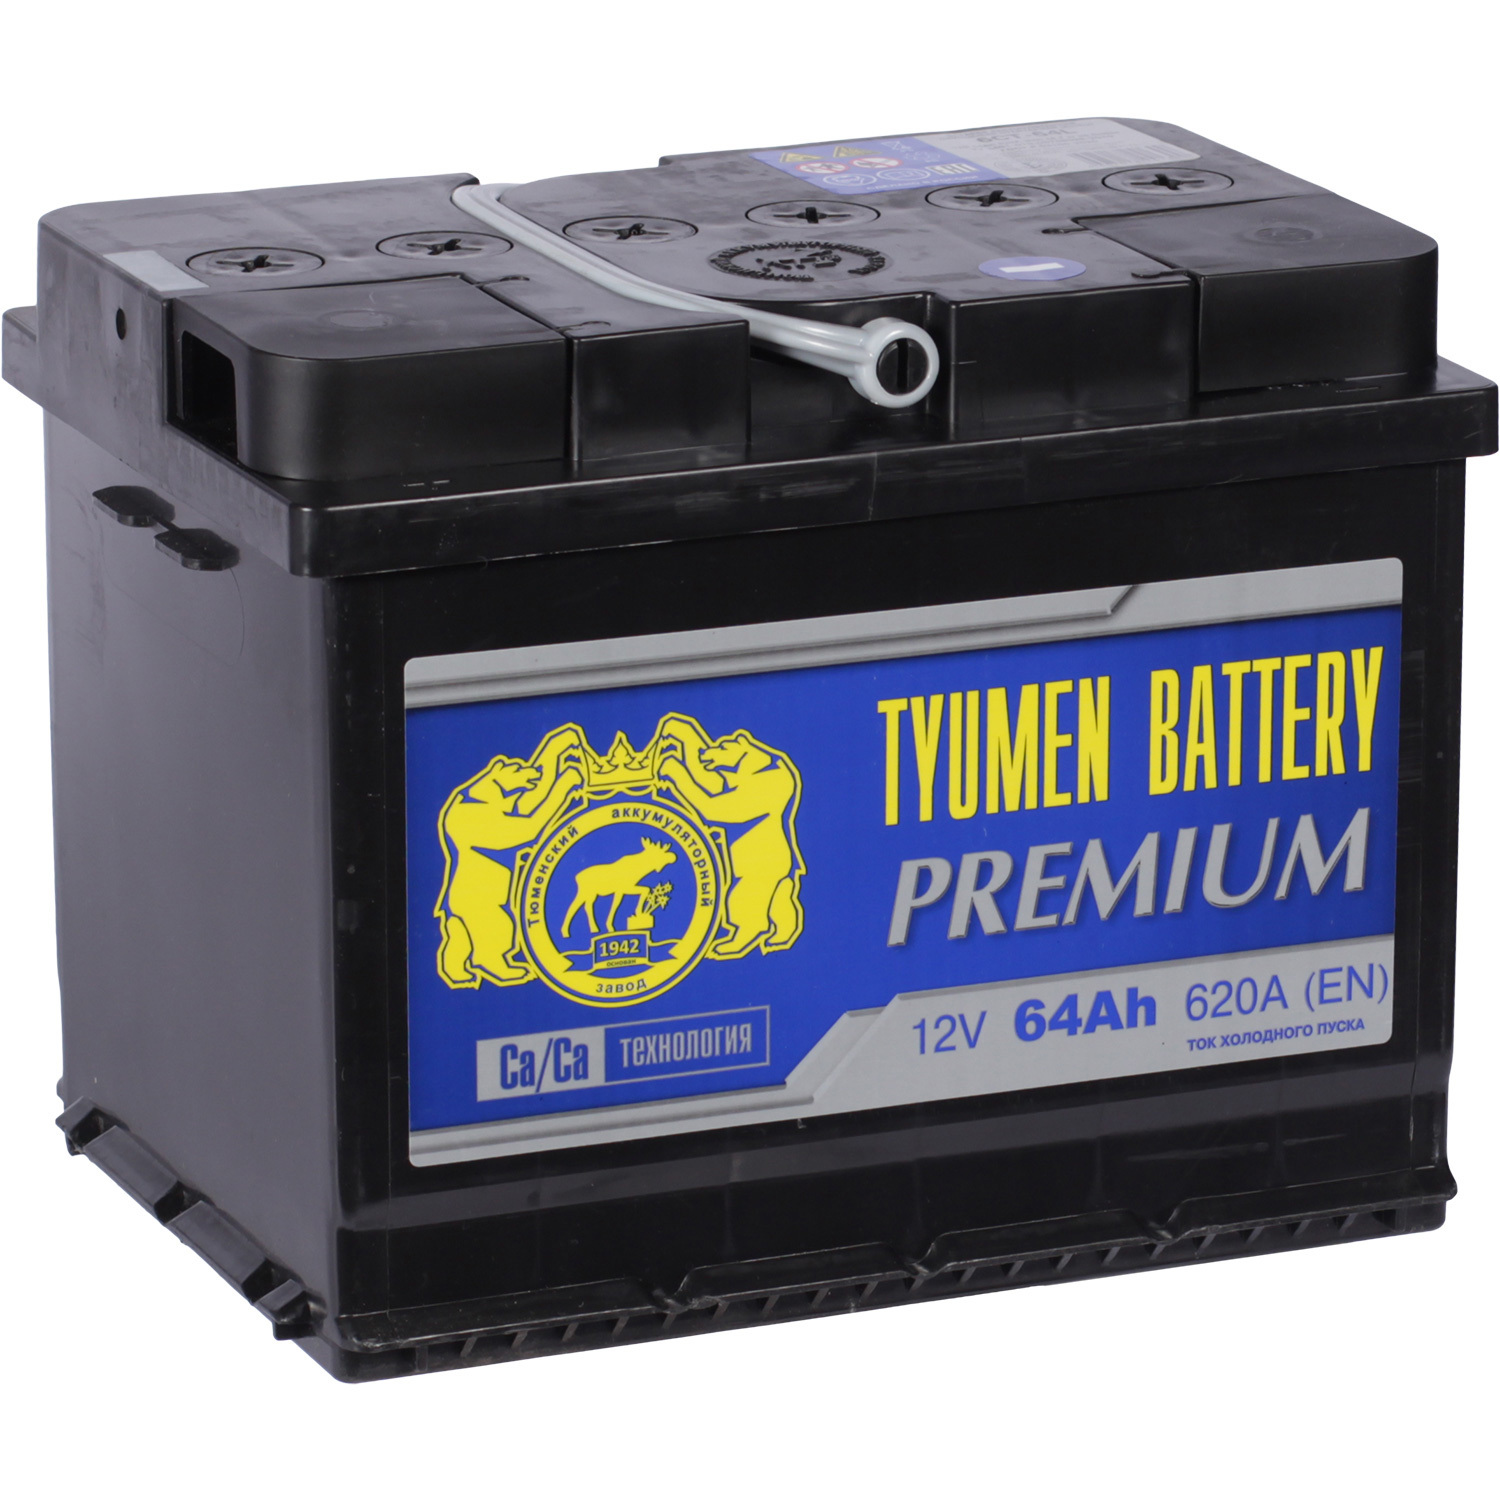 Tyumen Battery Автомобильный аккумулятор Tyumen Battery Premium 64 Ач прямая полярность L2 tyumen battery автомобильный аккумулятор tyumen battery 95 ач прямая полярность d31r